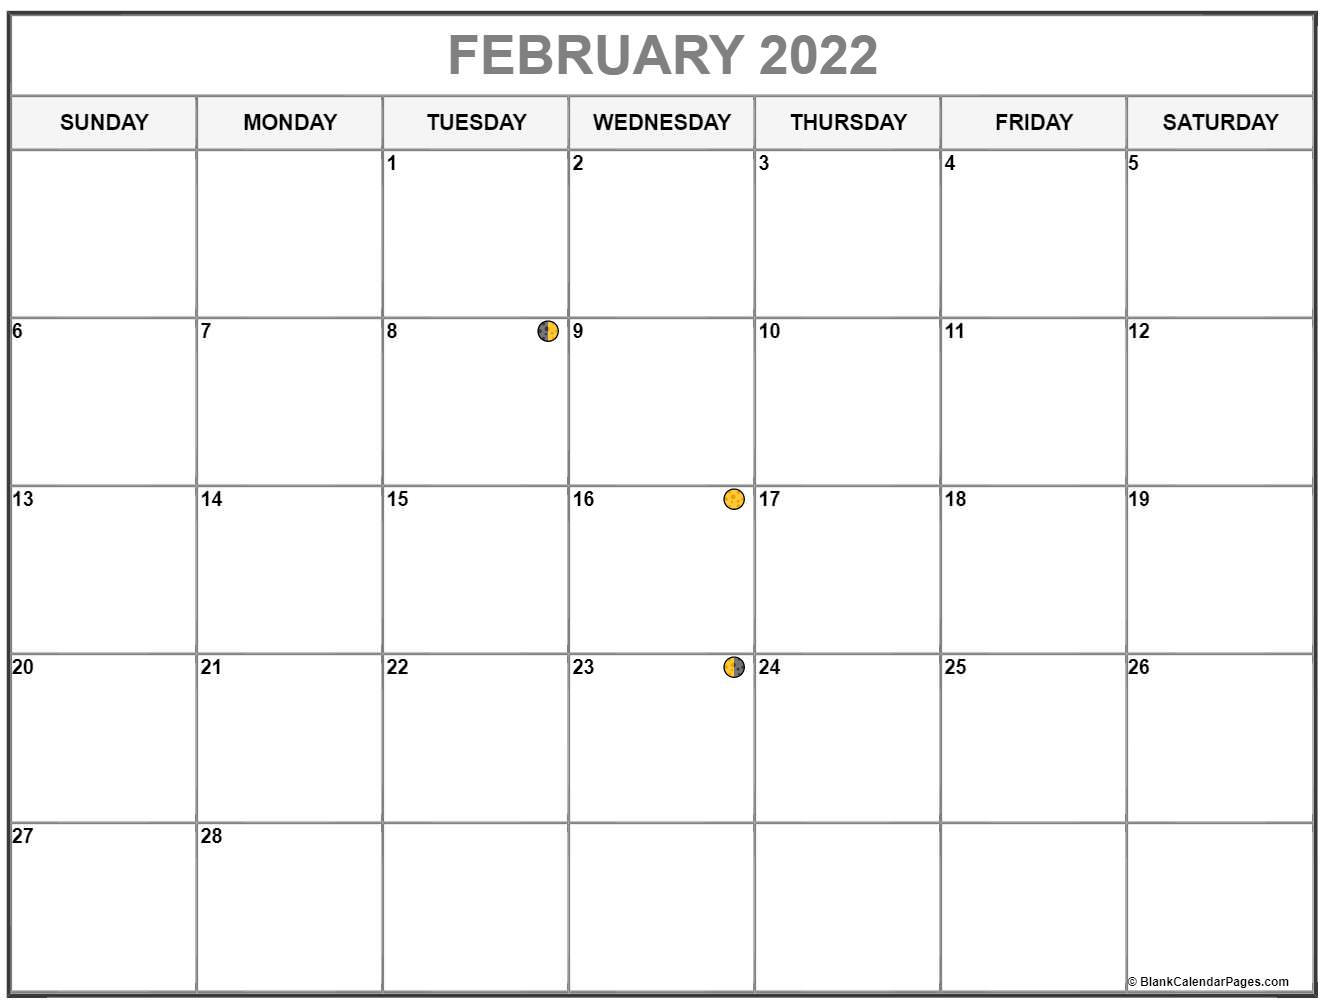 February 2022 Lunar Calendar | Moon Phase Calendar